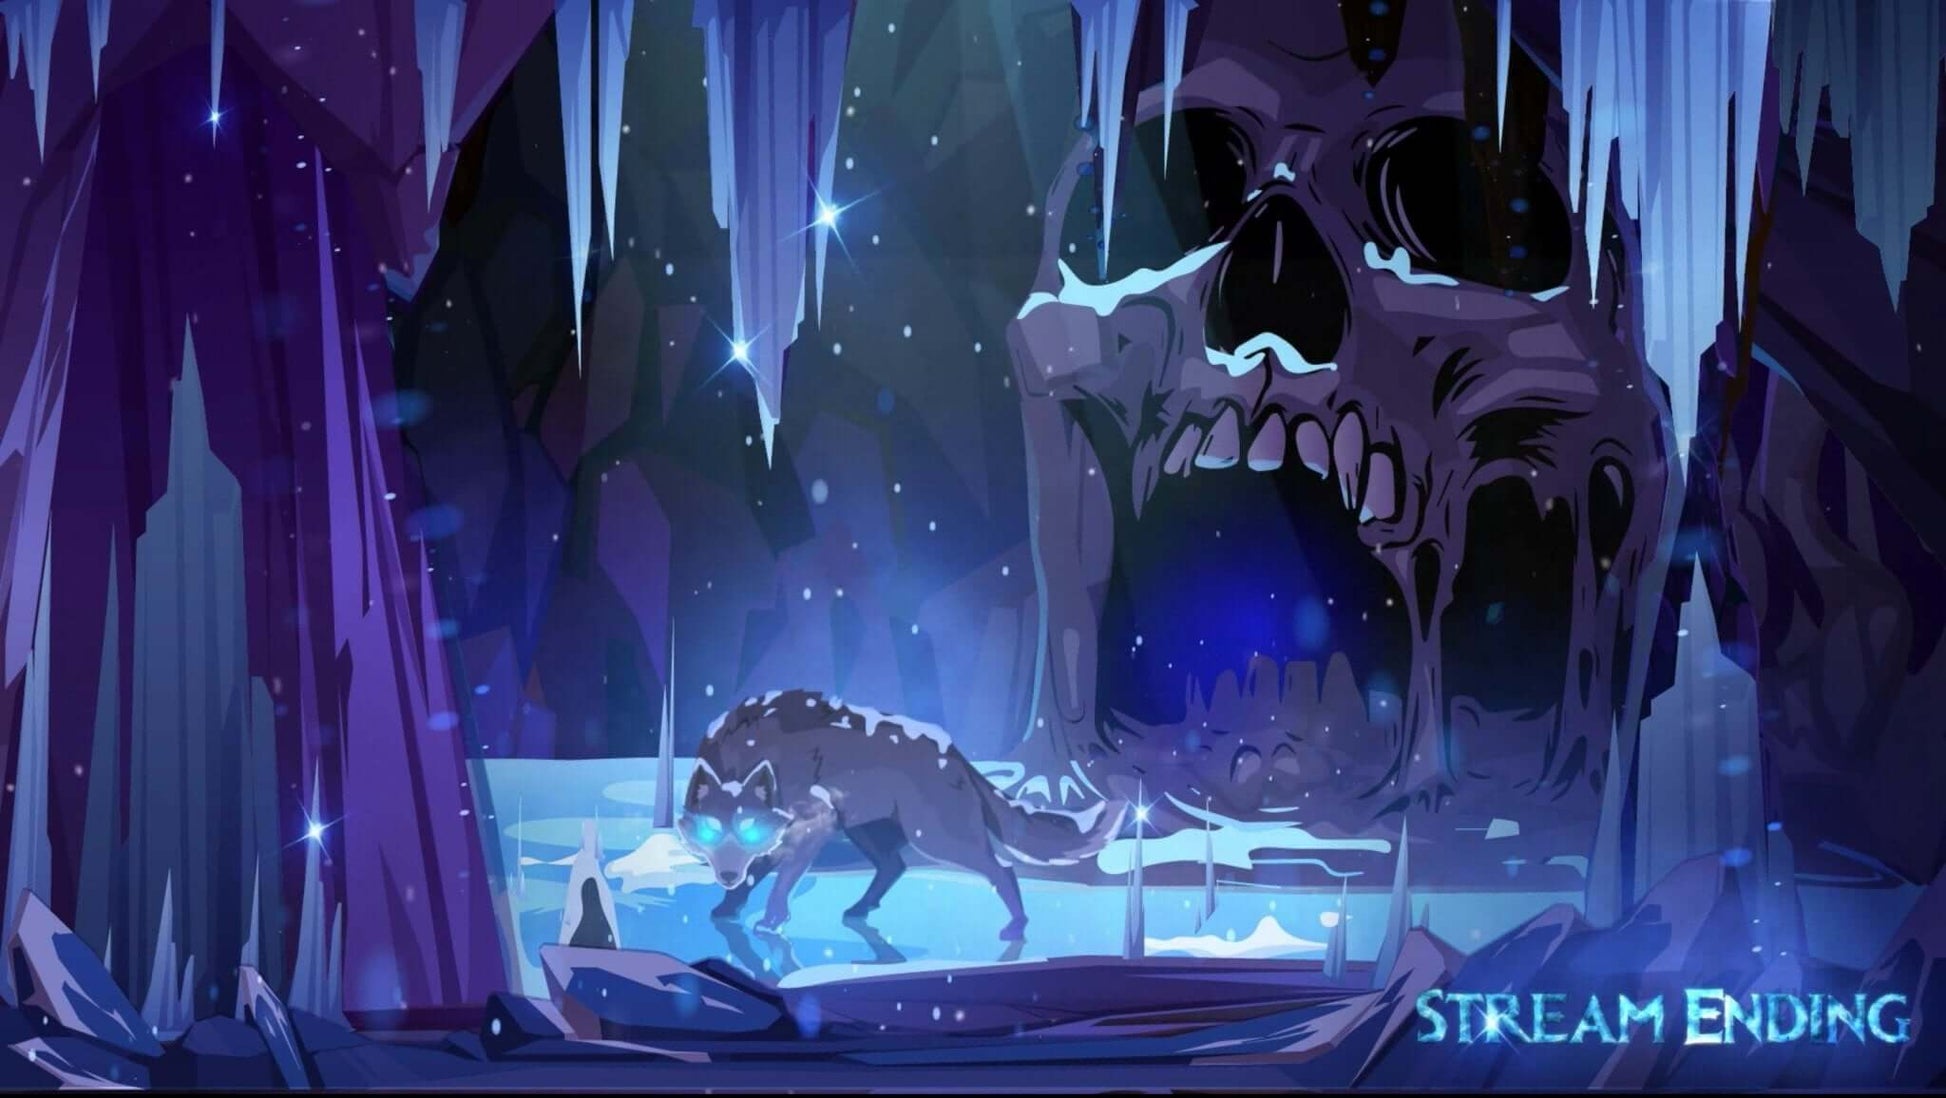 Animated Scenes Ice Wolf in Frozen Skull Cave - Overlay - Stream K-Arts